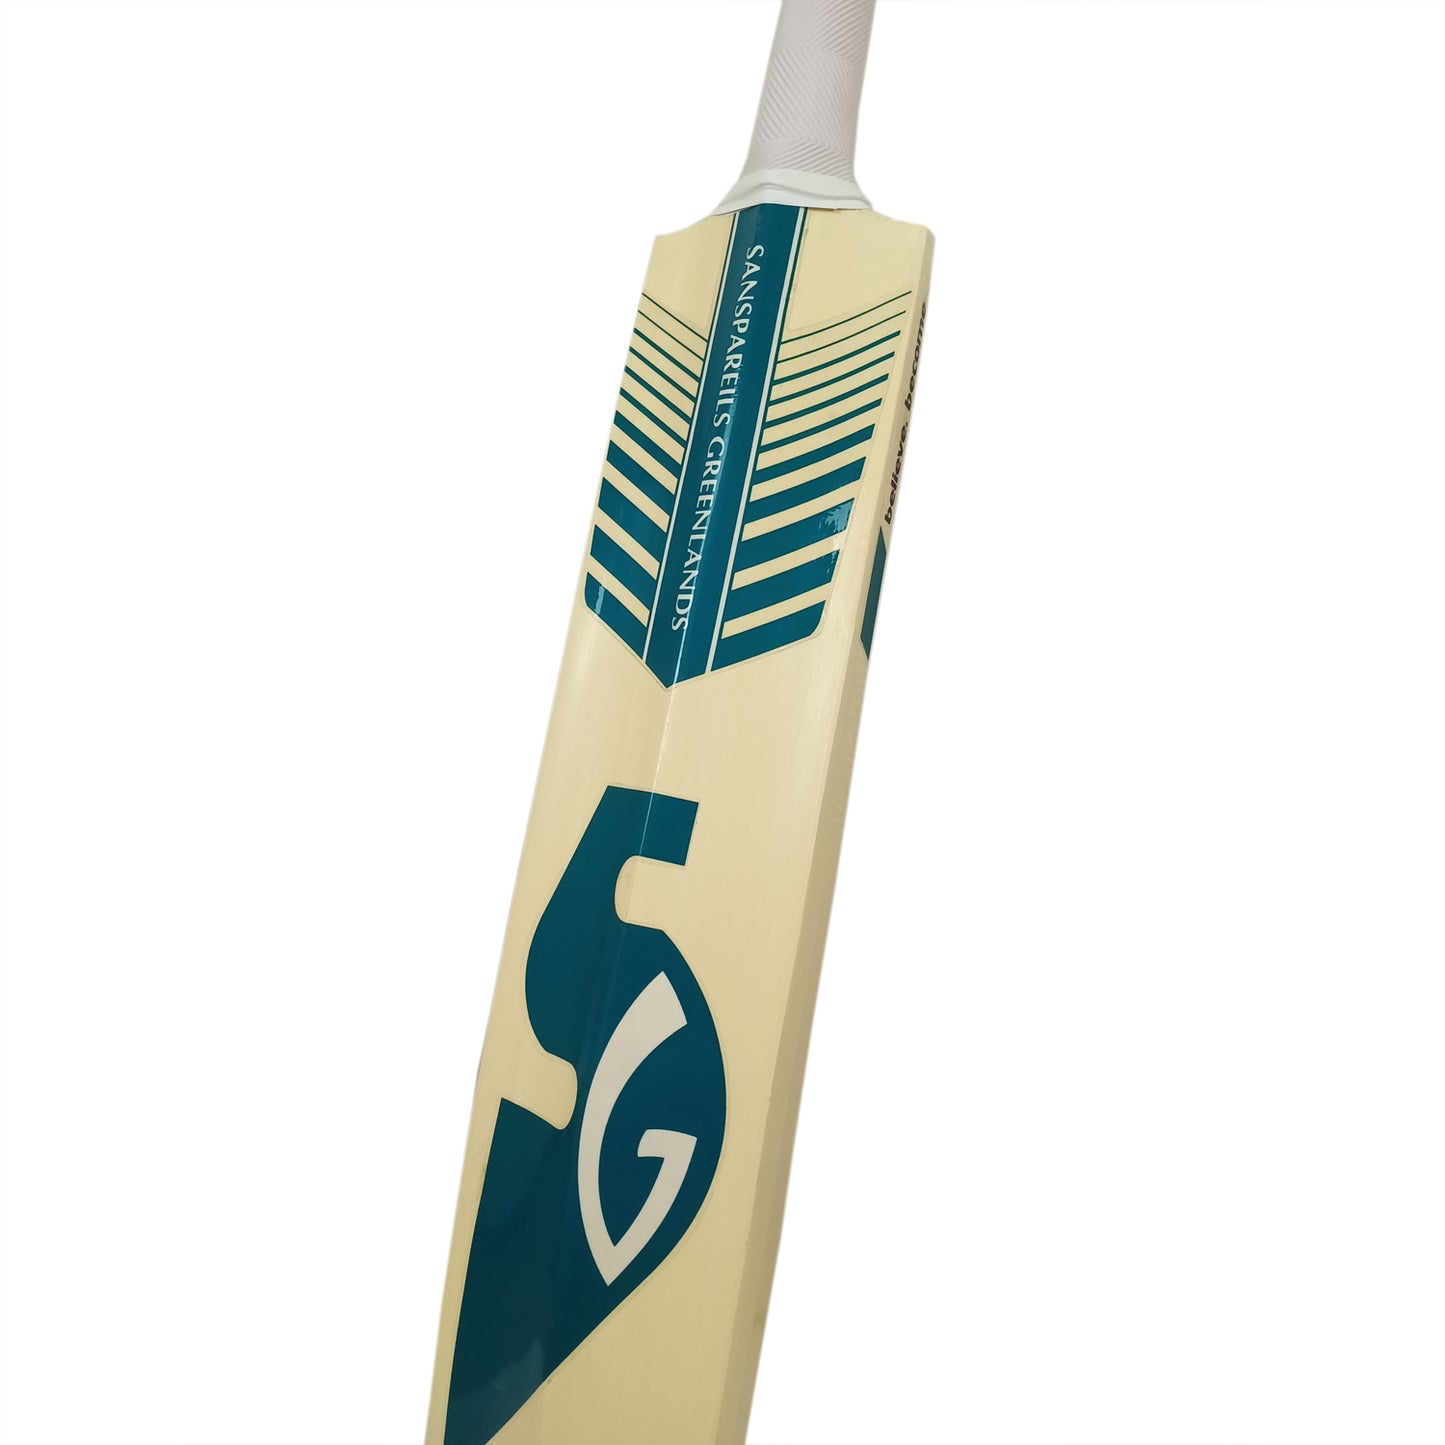 SG Prokick Kashmir Willow Cricket Bat - Best Price online Prokicksports.com